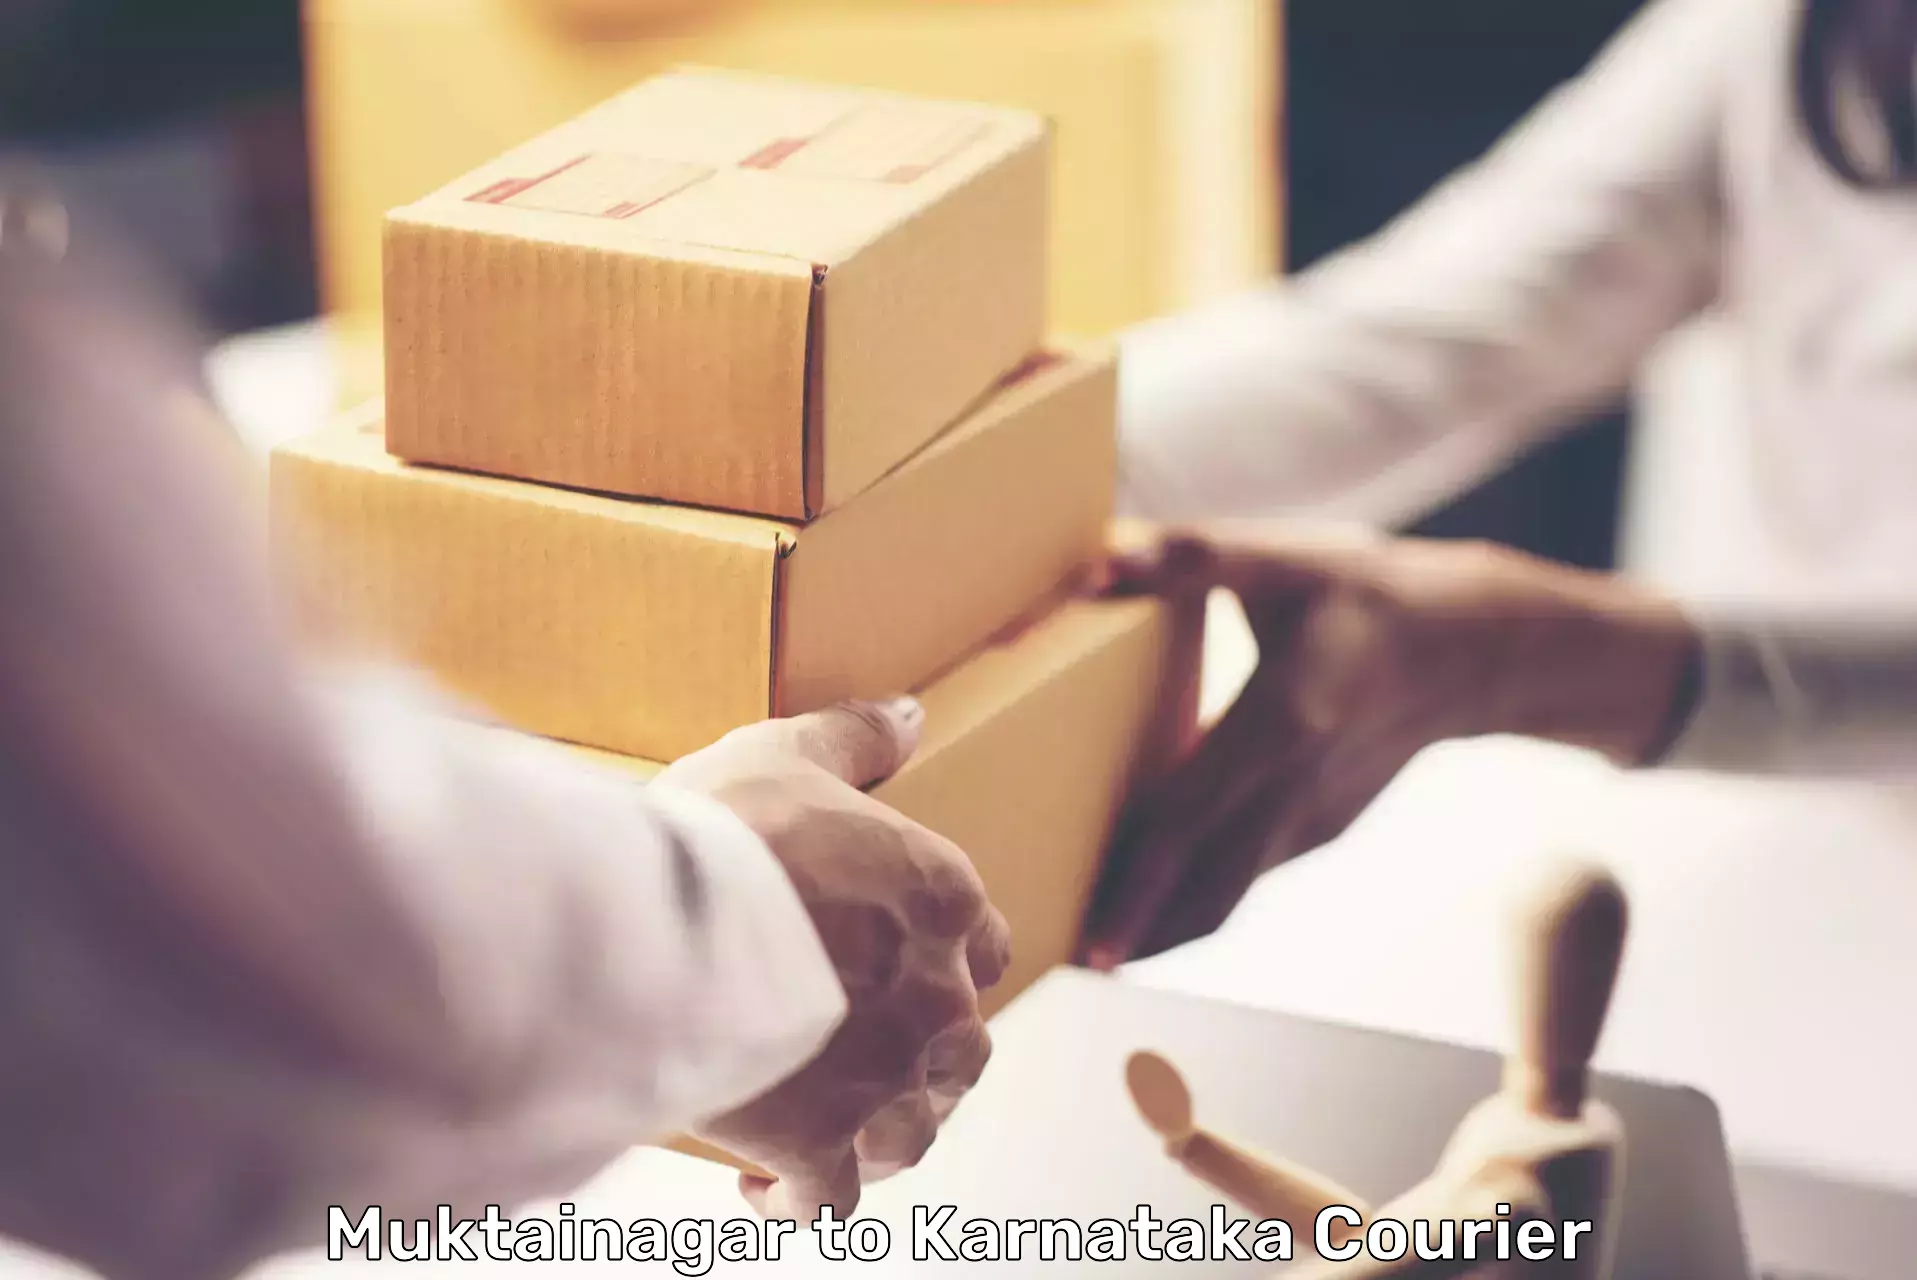 Courier service comparison Muktainagar to Kushalnagar